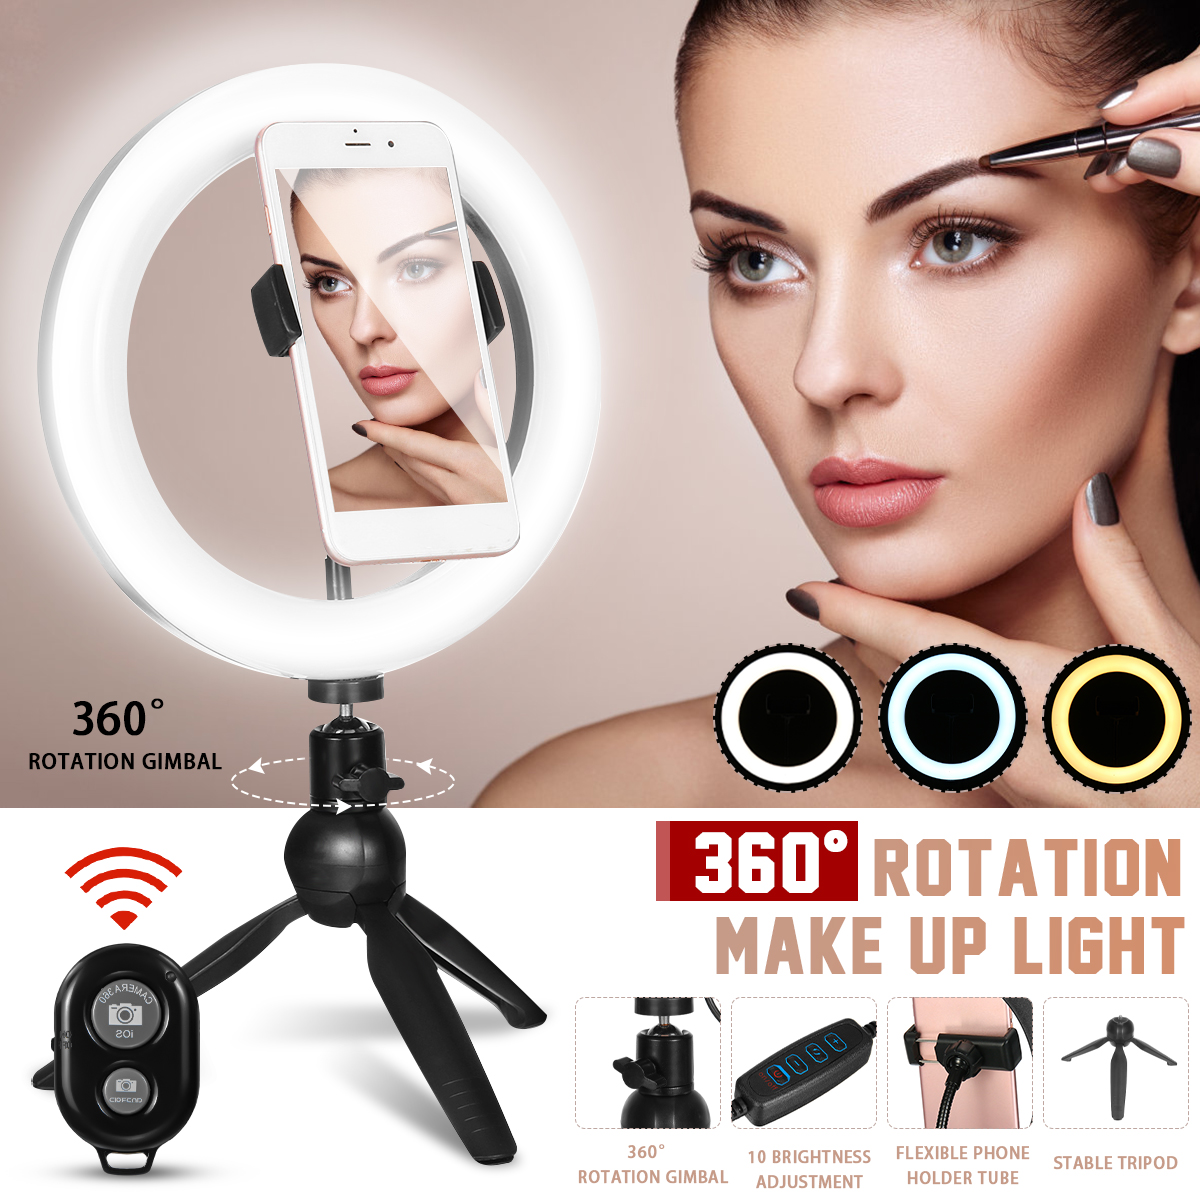 Bakeey-360deg-Rotation-Gimbal-Mobile-Phone-Live-Fill-Light-bluetooth-Remote-Control-USB-Powered-Desk-1734136-2